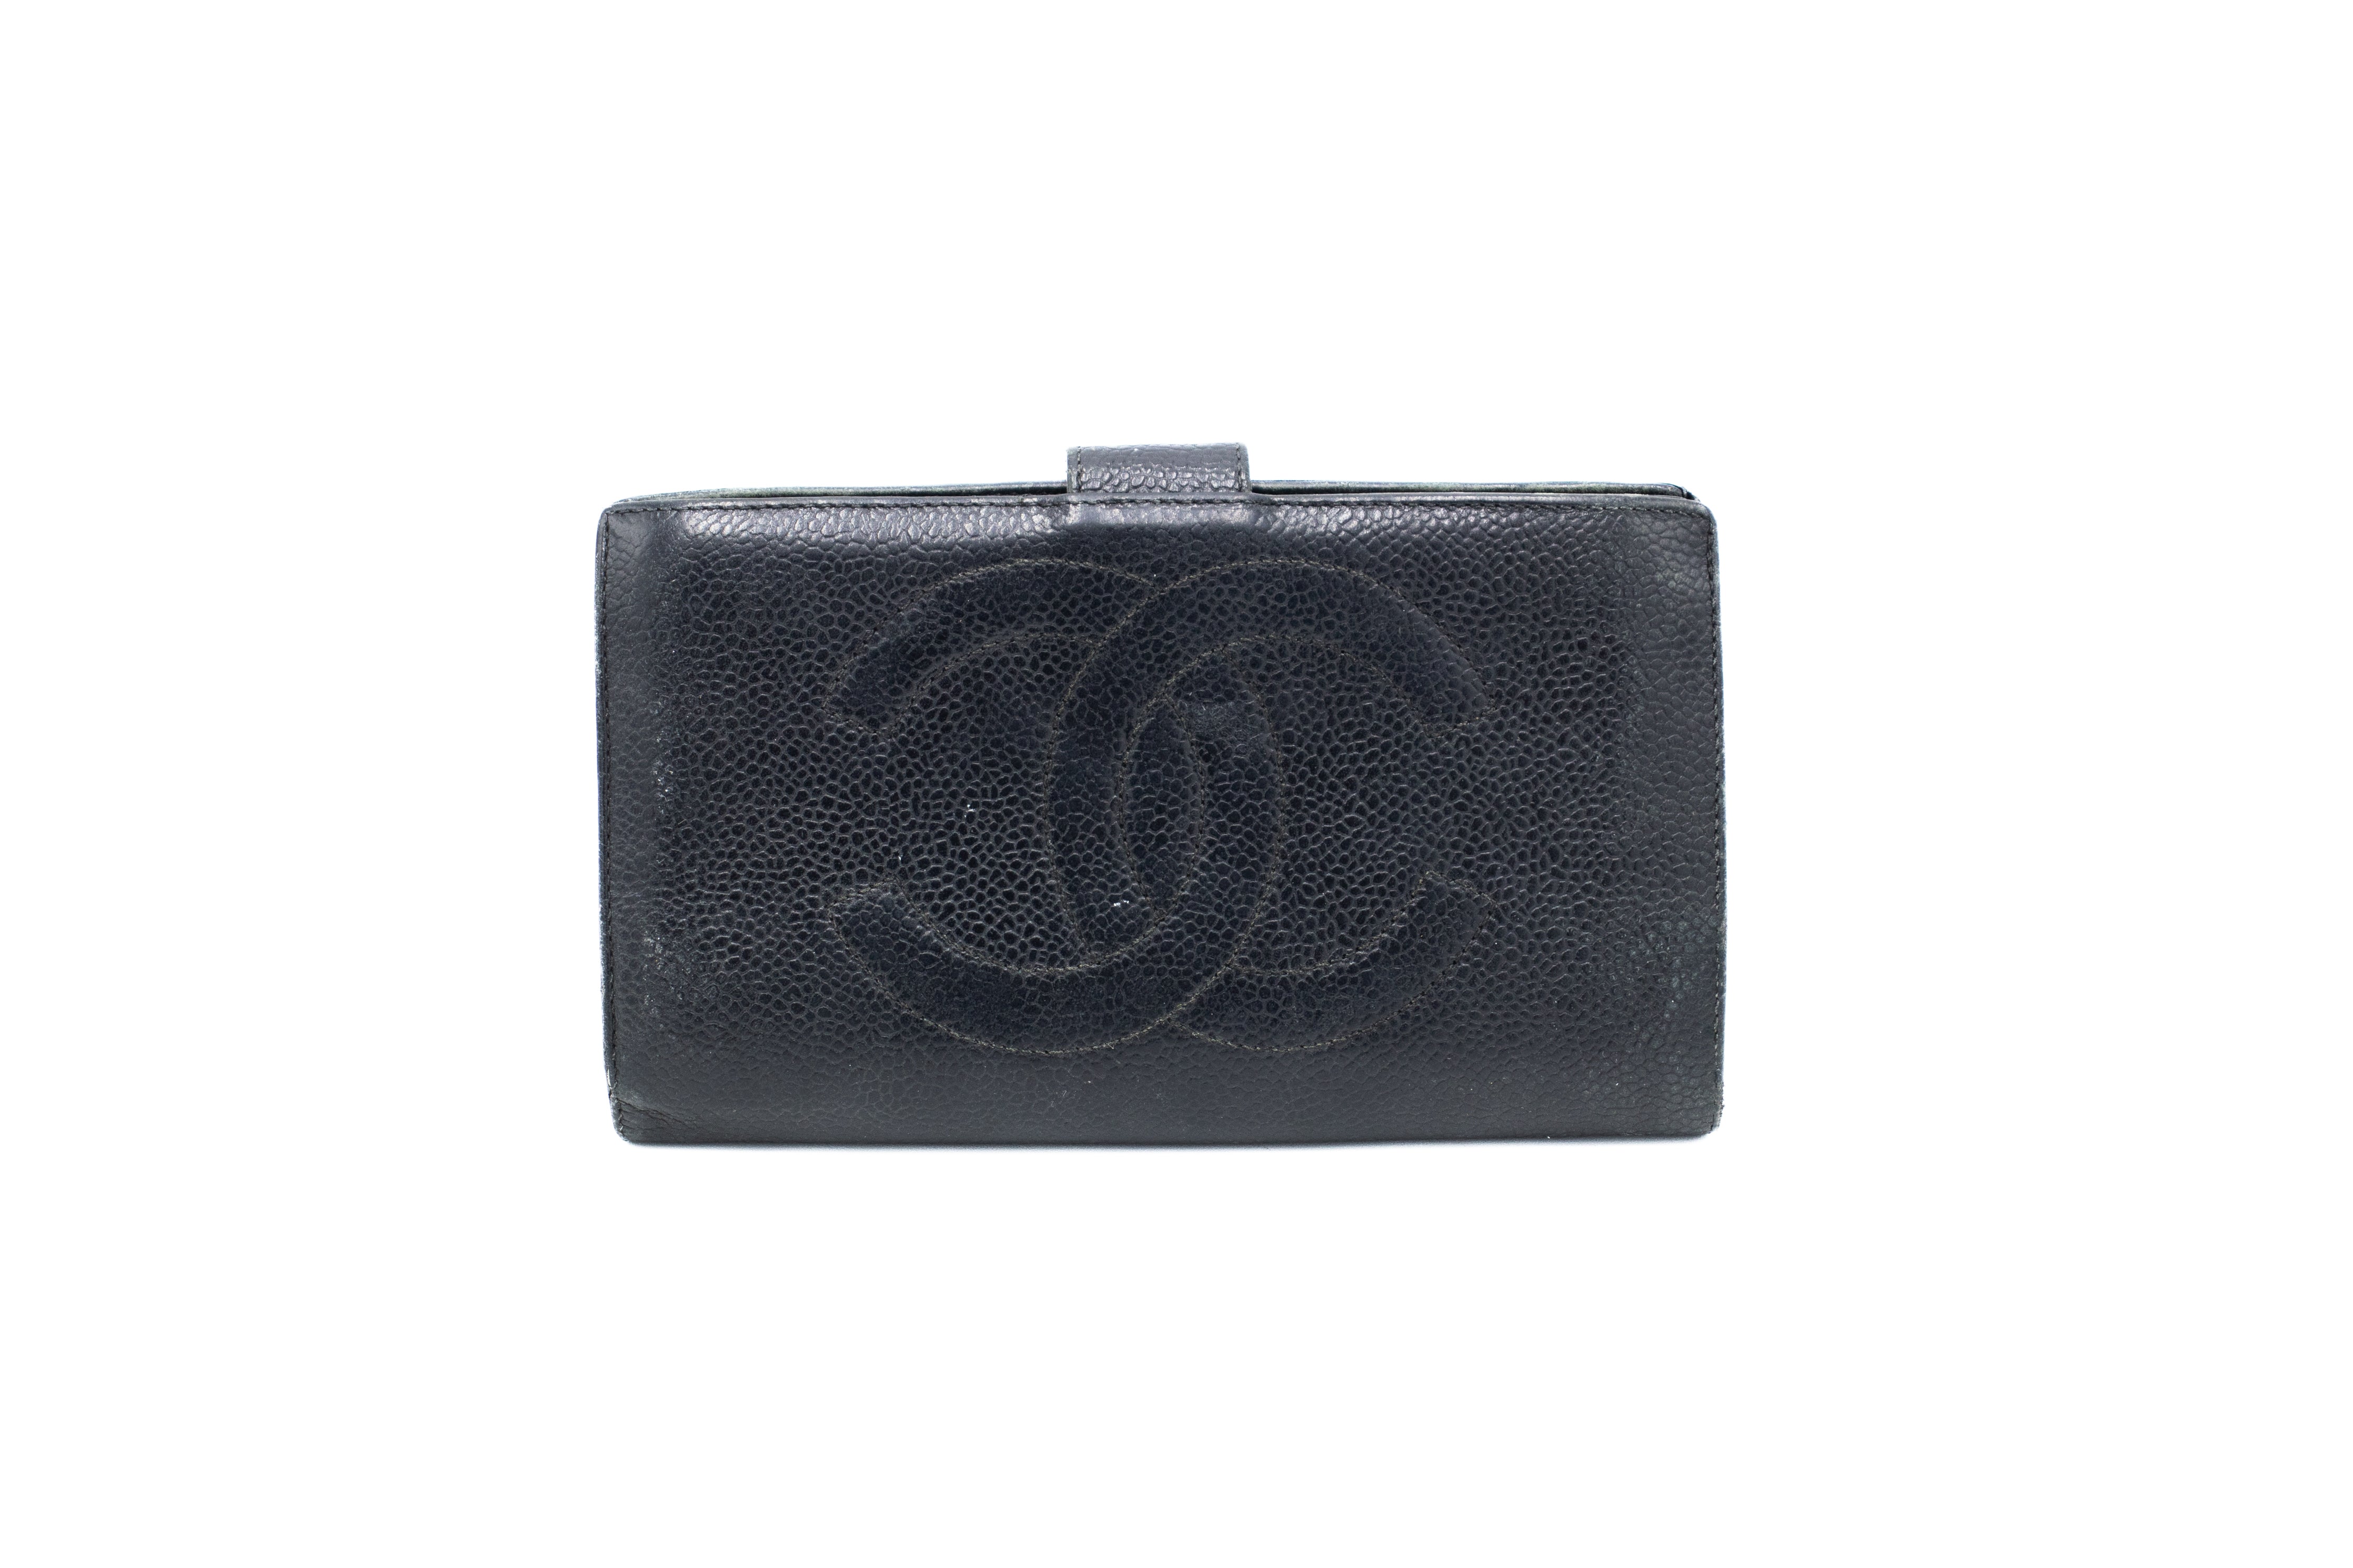 Chanel "CC" Logo Wallet